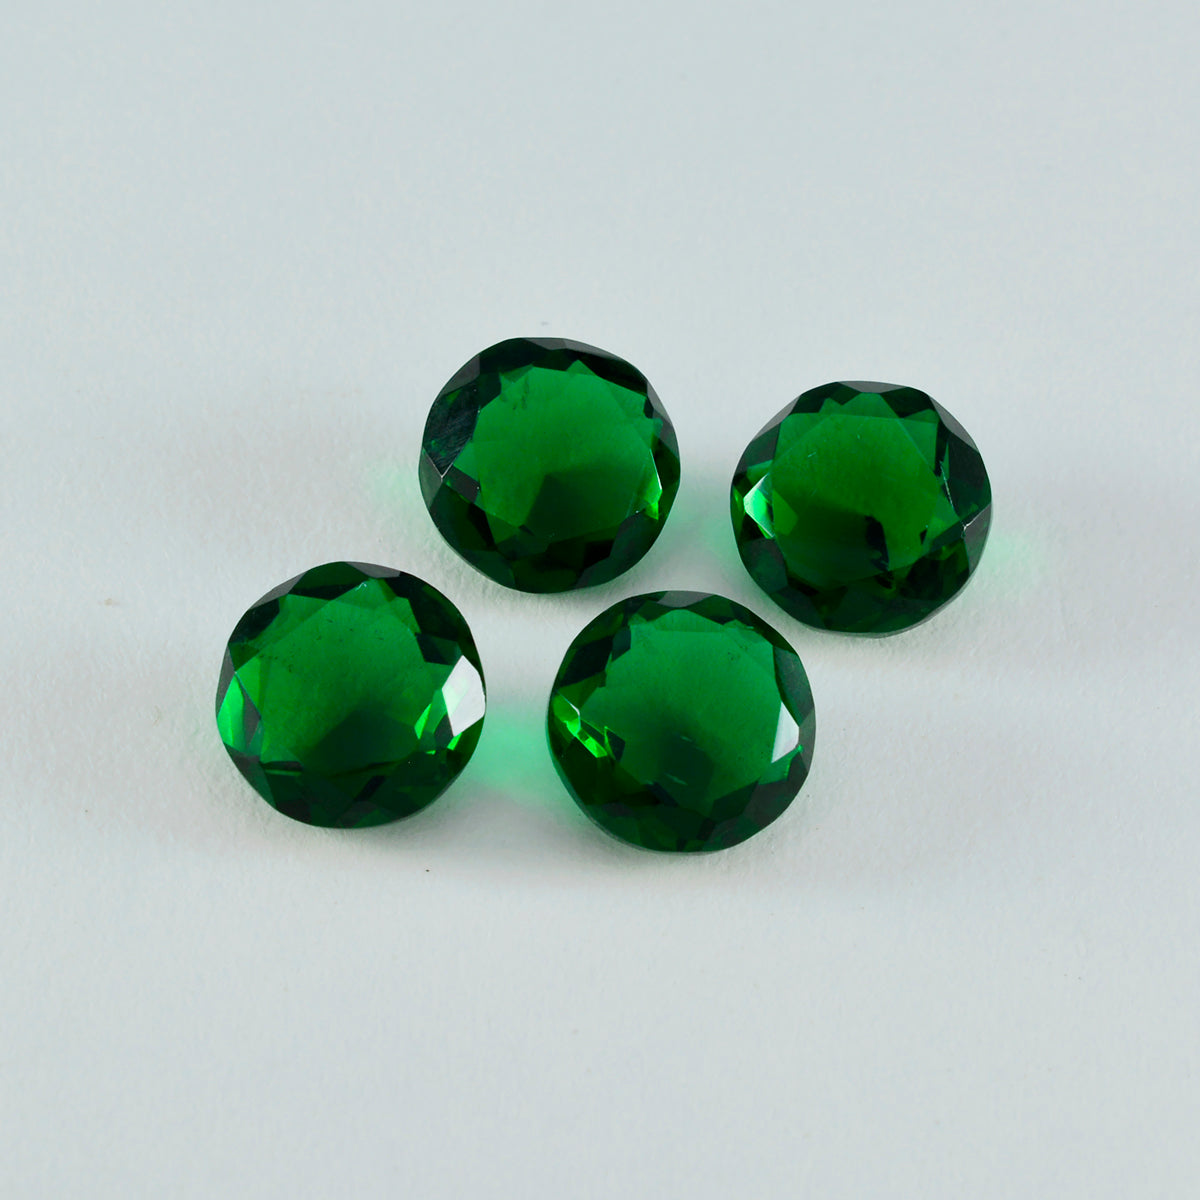 Riyogems 1 Stück grüner Smaragd, CZ, facettiert, 11 x 11 mm, runde Form, A1-Qualität, loser Edelstein